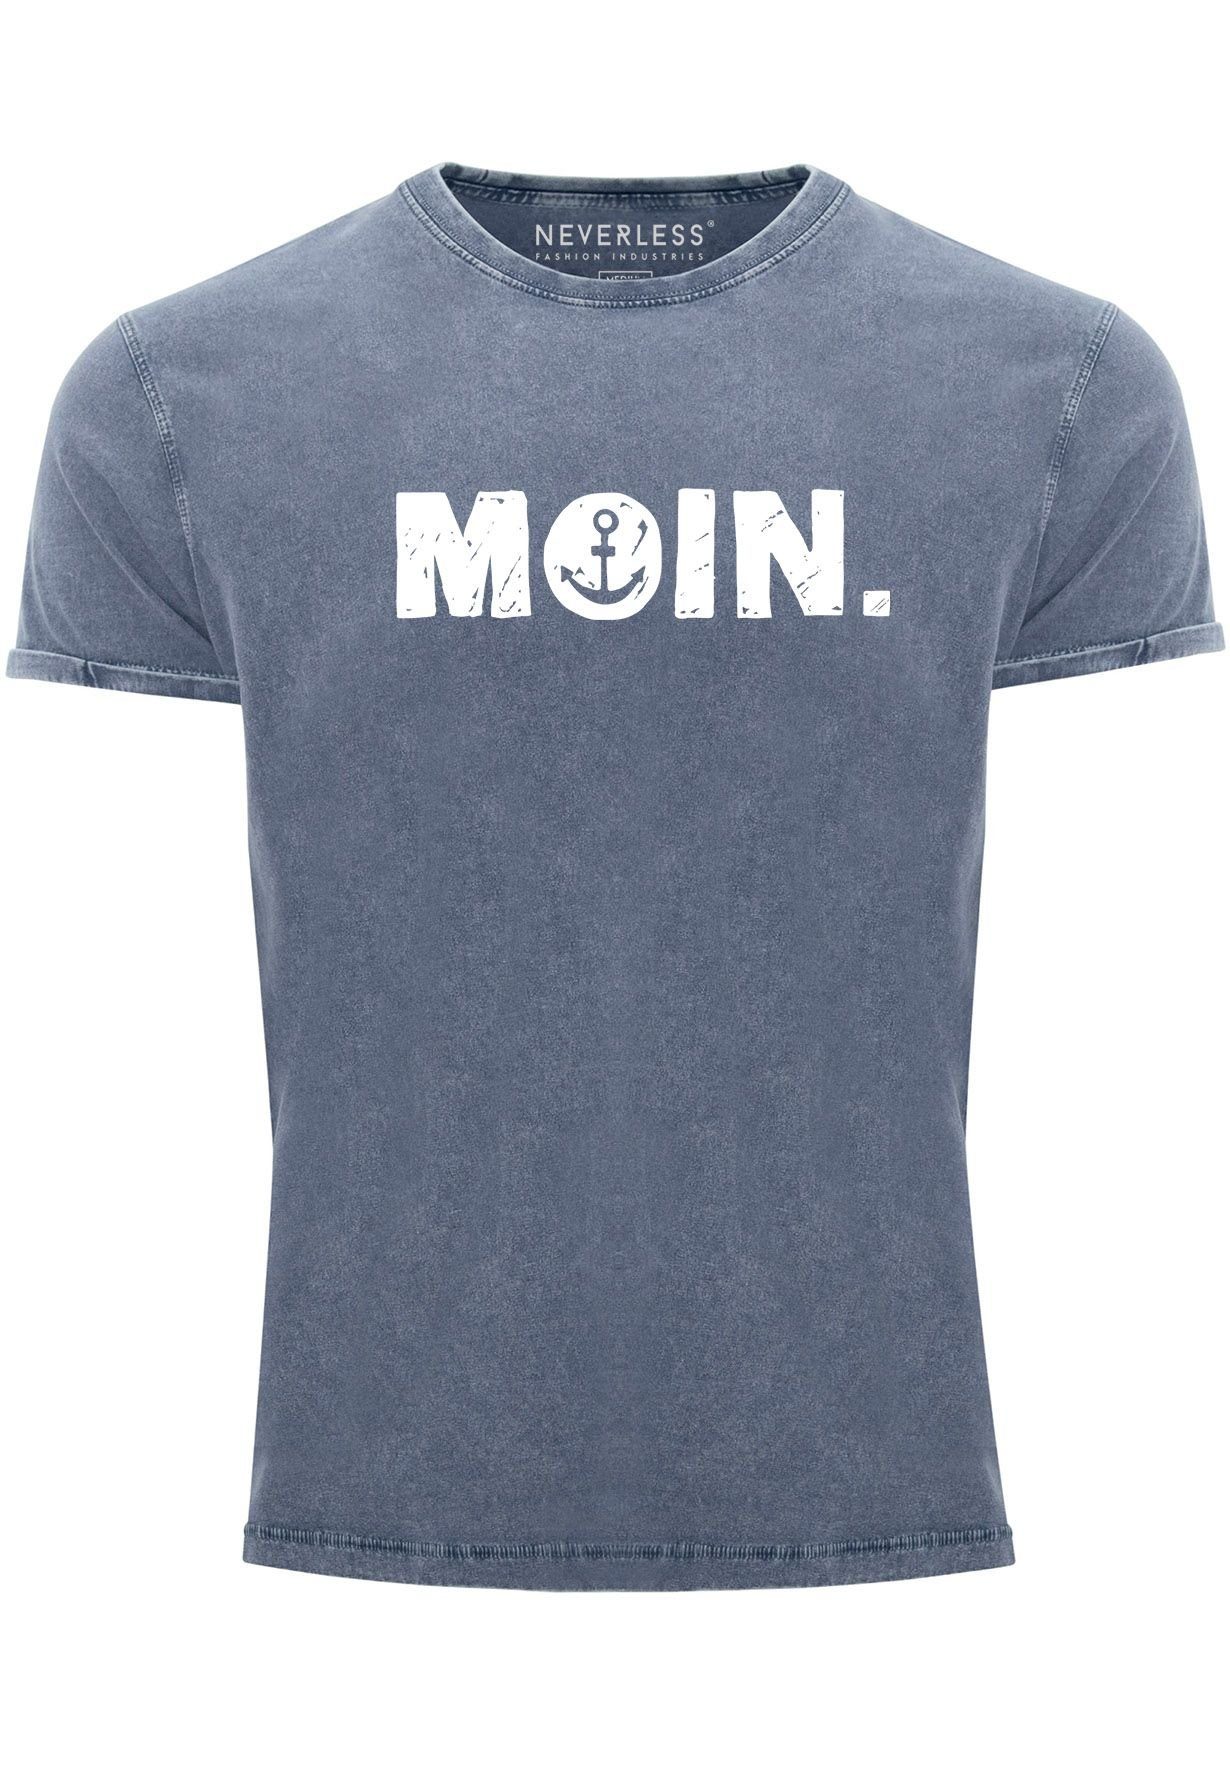 Neverless Print-Shirt Herren Vintage Shirt Moin Dialekt Norden Hamburg Anker Printshirt T-Sh mit Print blau